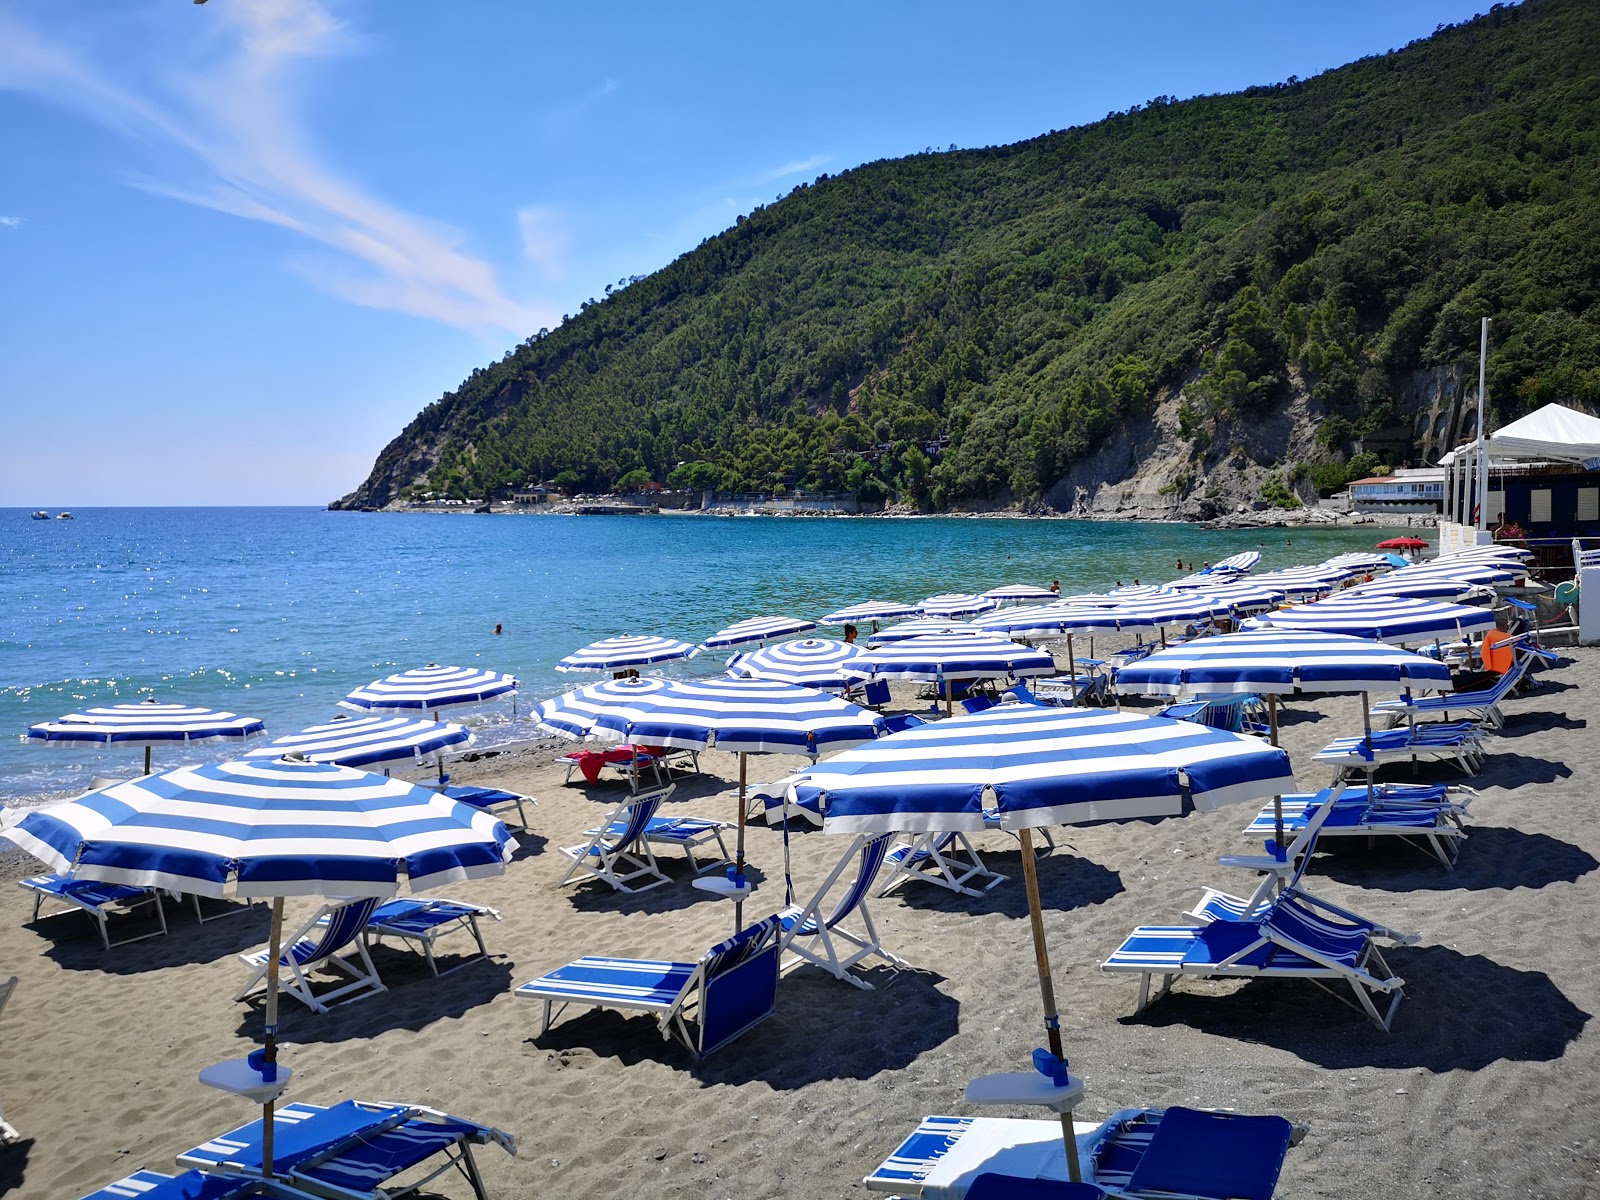 Spiaggia La Secca'in fotoğrafı doğrudan plaj ile birlikte